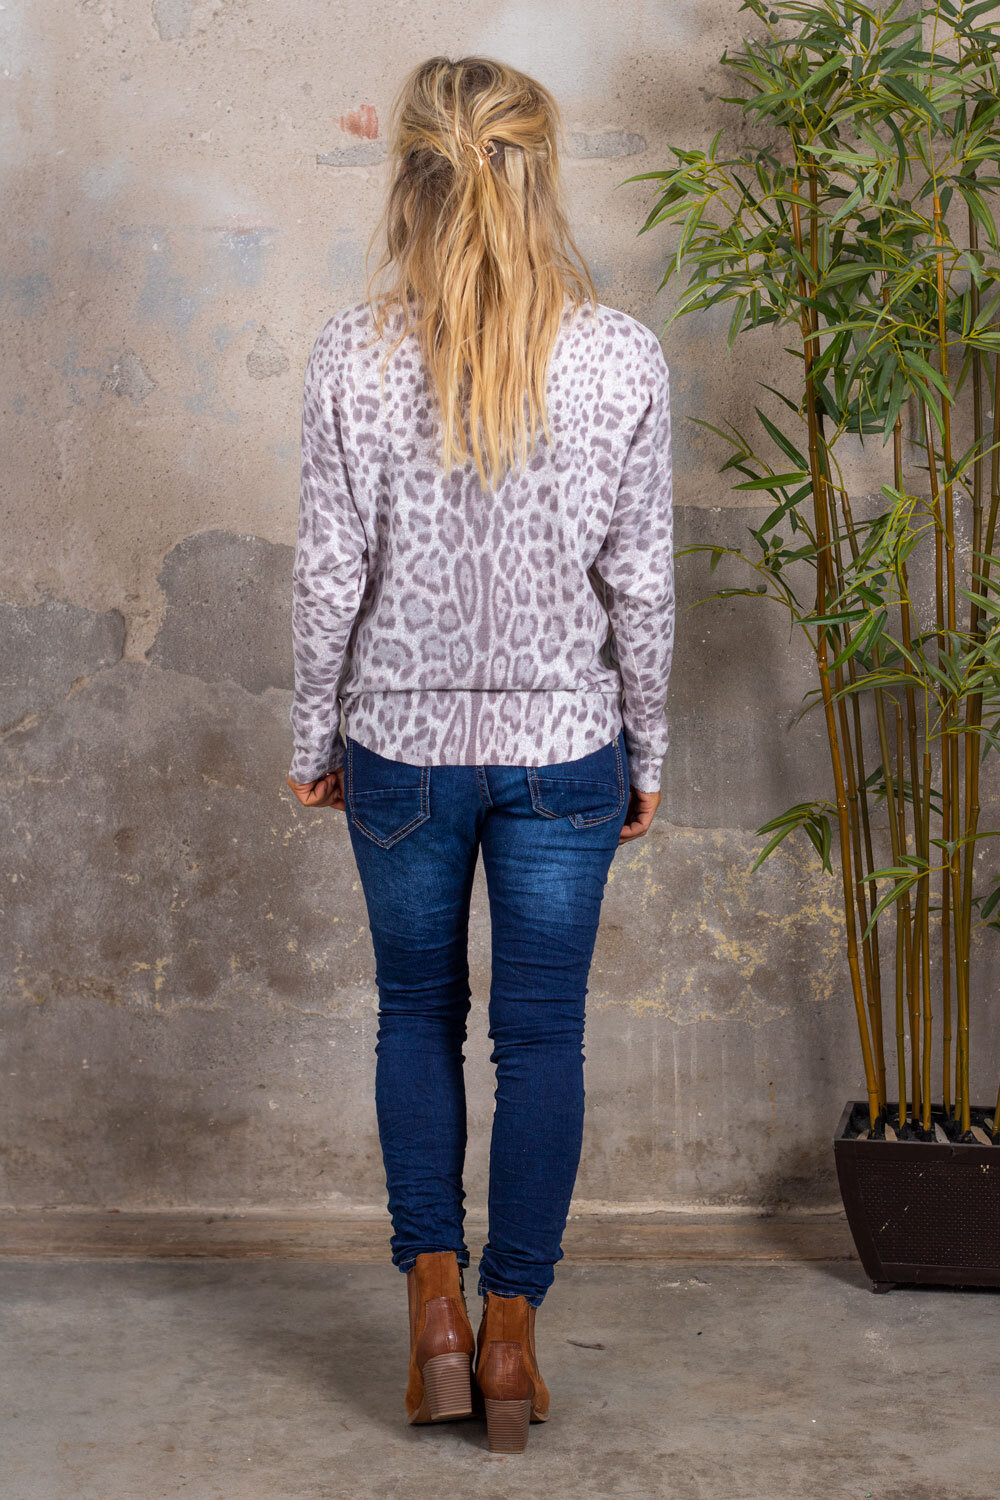 Susan Leopard Print Sweater - Light Grey